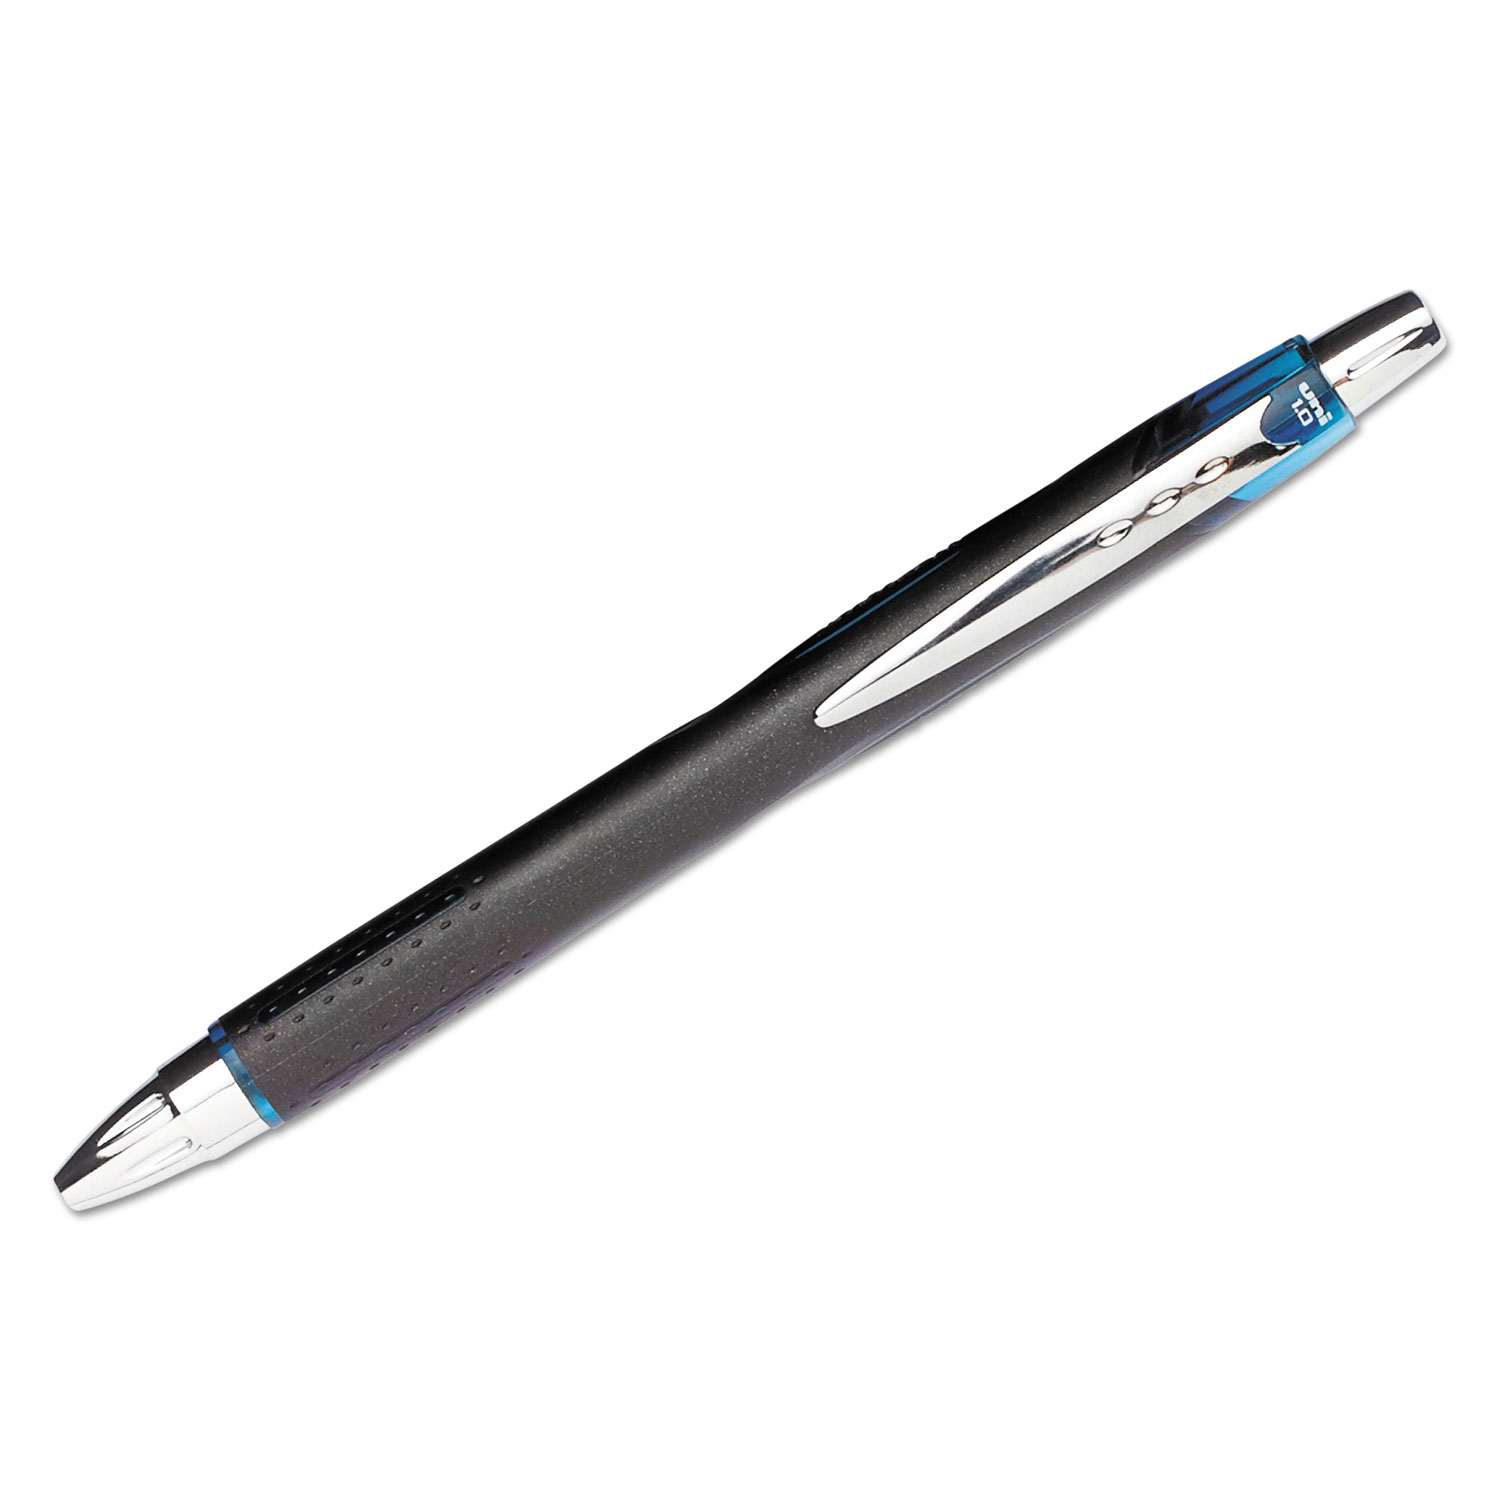  uni-ball 1858845 Jetstream RT BLX Retractable Roller Ball Pen, 1mm, Blue-Black Ink, Black Barrel (UBC1858845) 